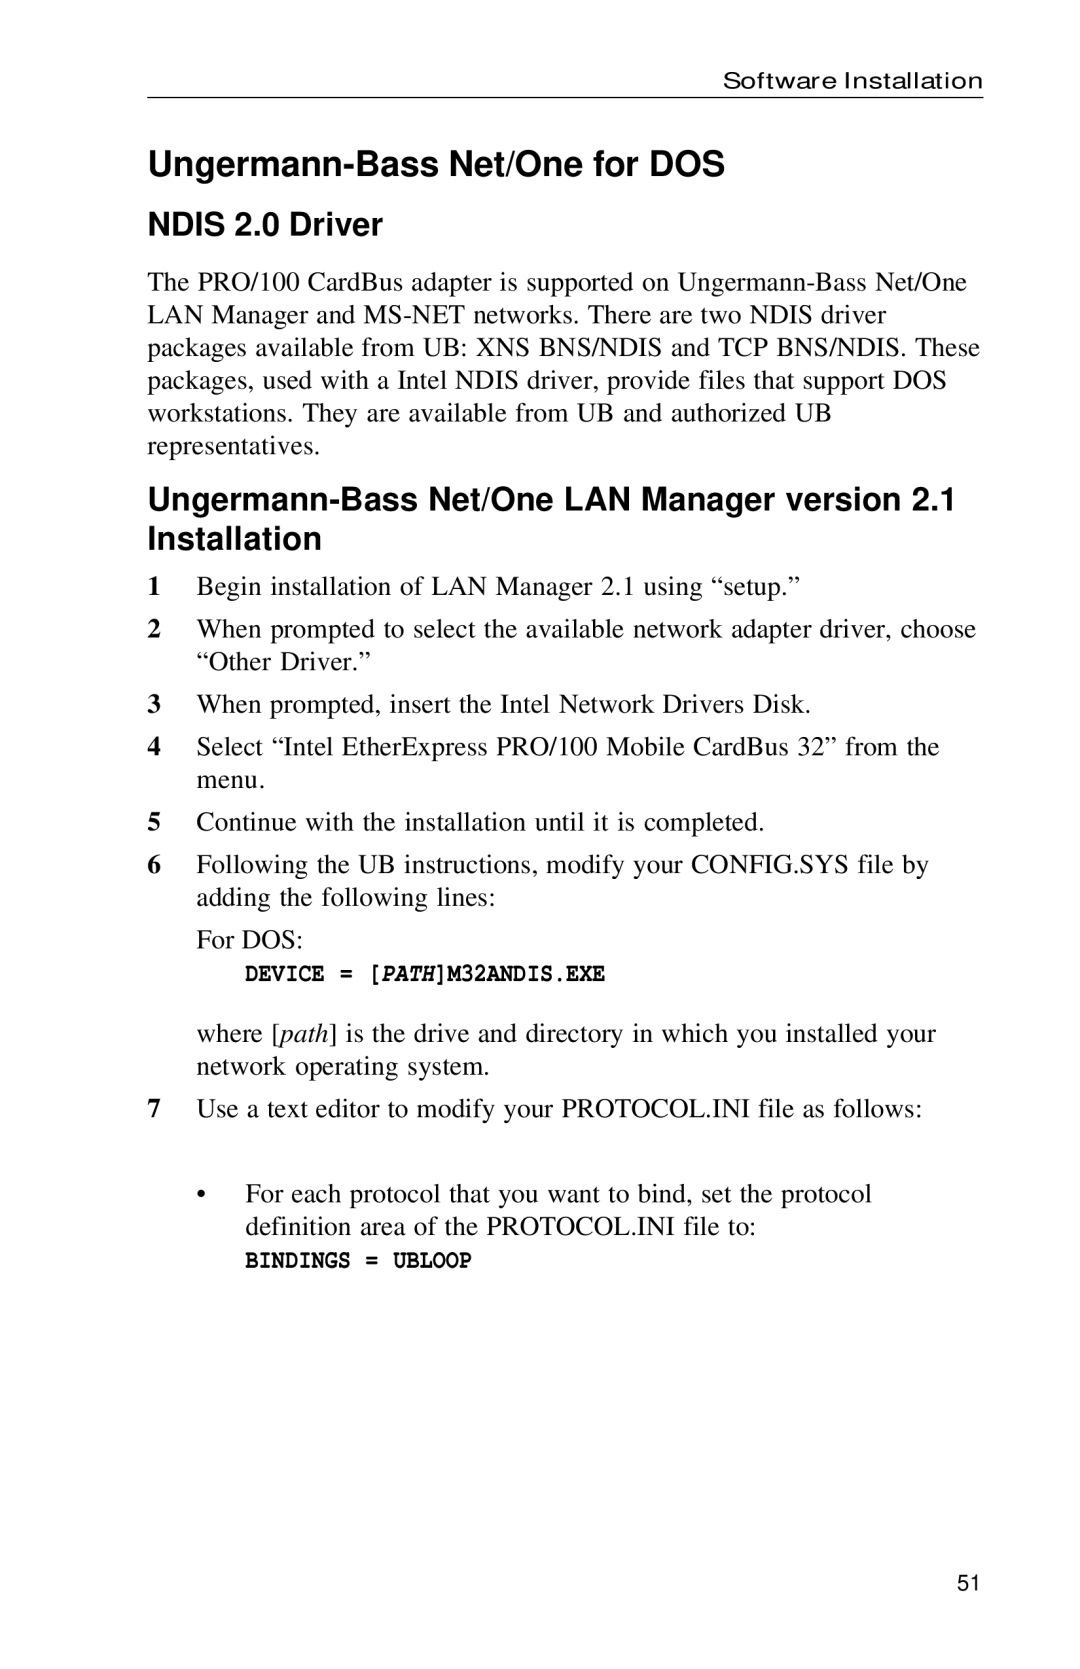 Intel PRO Ungermann-Bass Net/One for DOS, Ungermann-Bass Net/One LAN Manager version 2.1 Installation, Bindings = Ubloop 